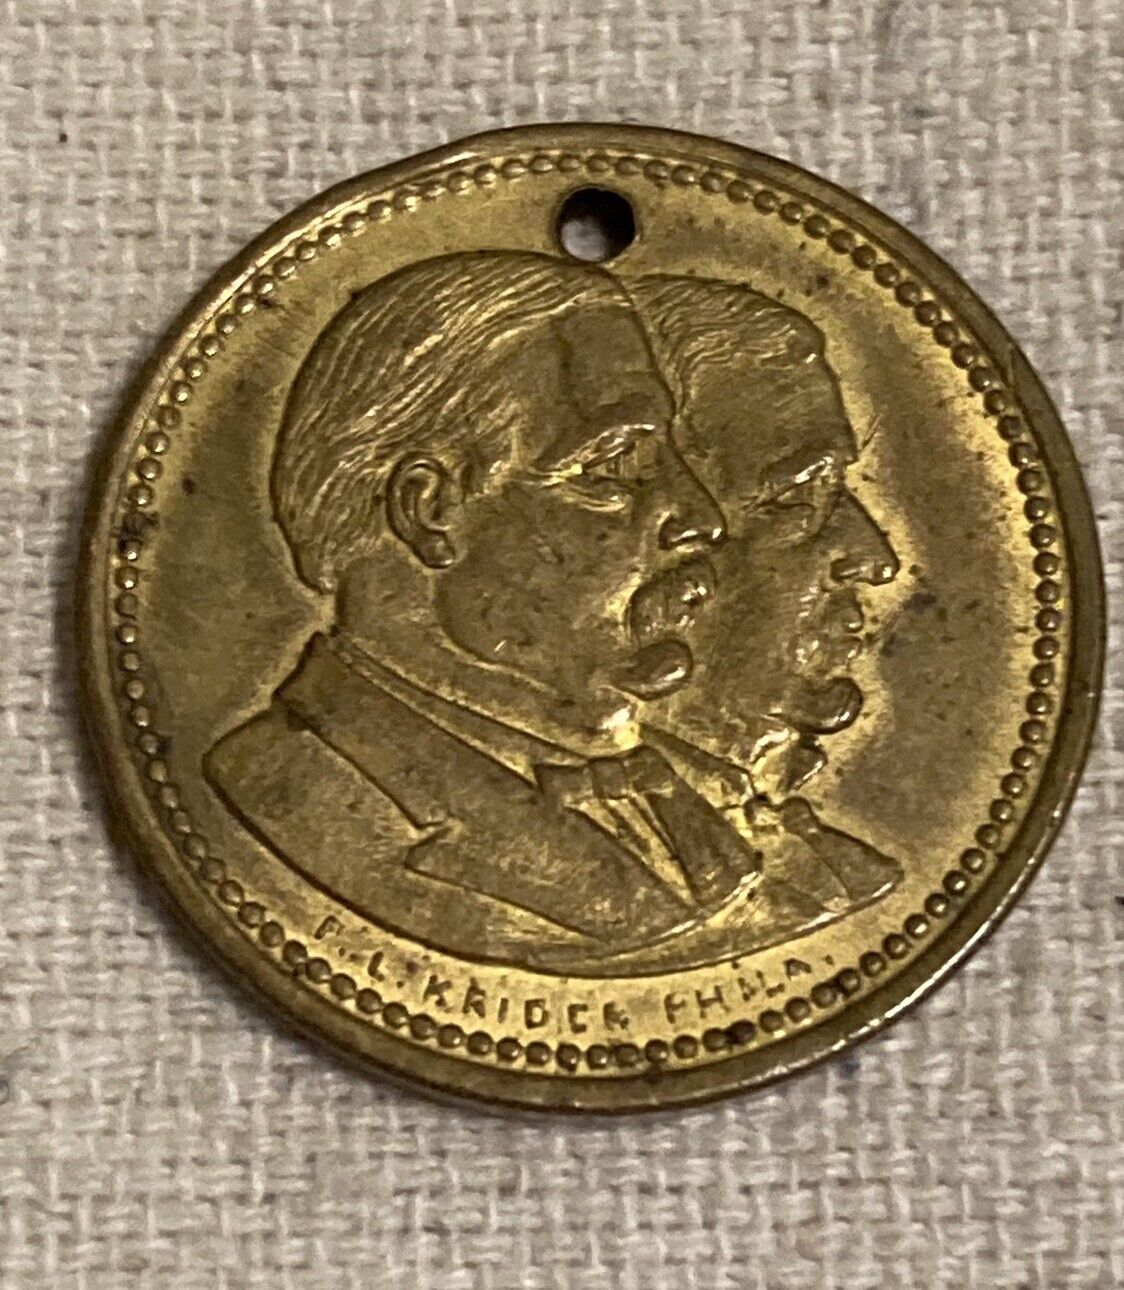 1884 CLEVELAND & HENDRICKS president token coin medal Campaign Vintage Old